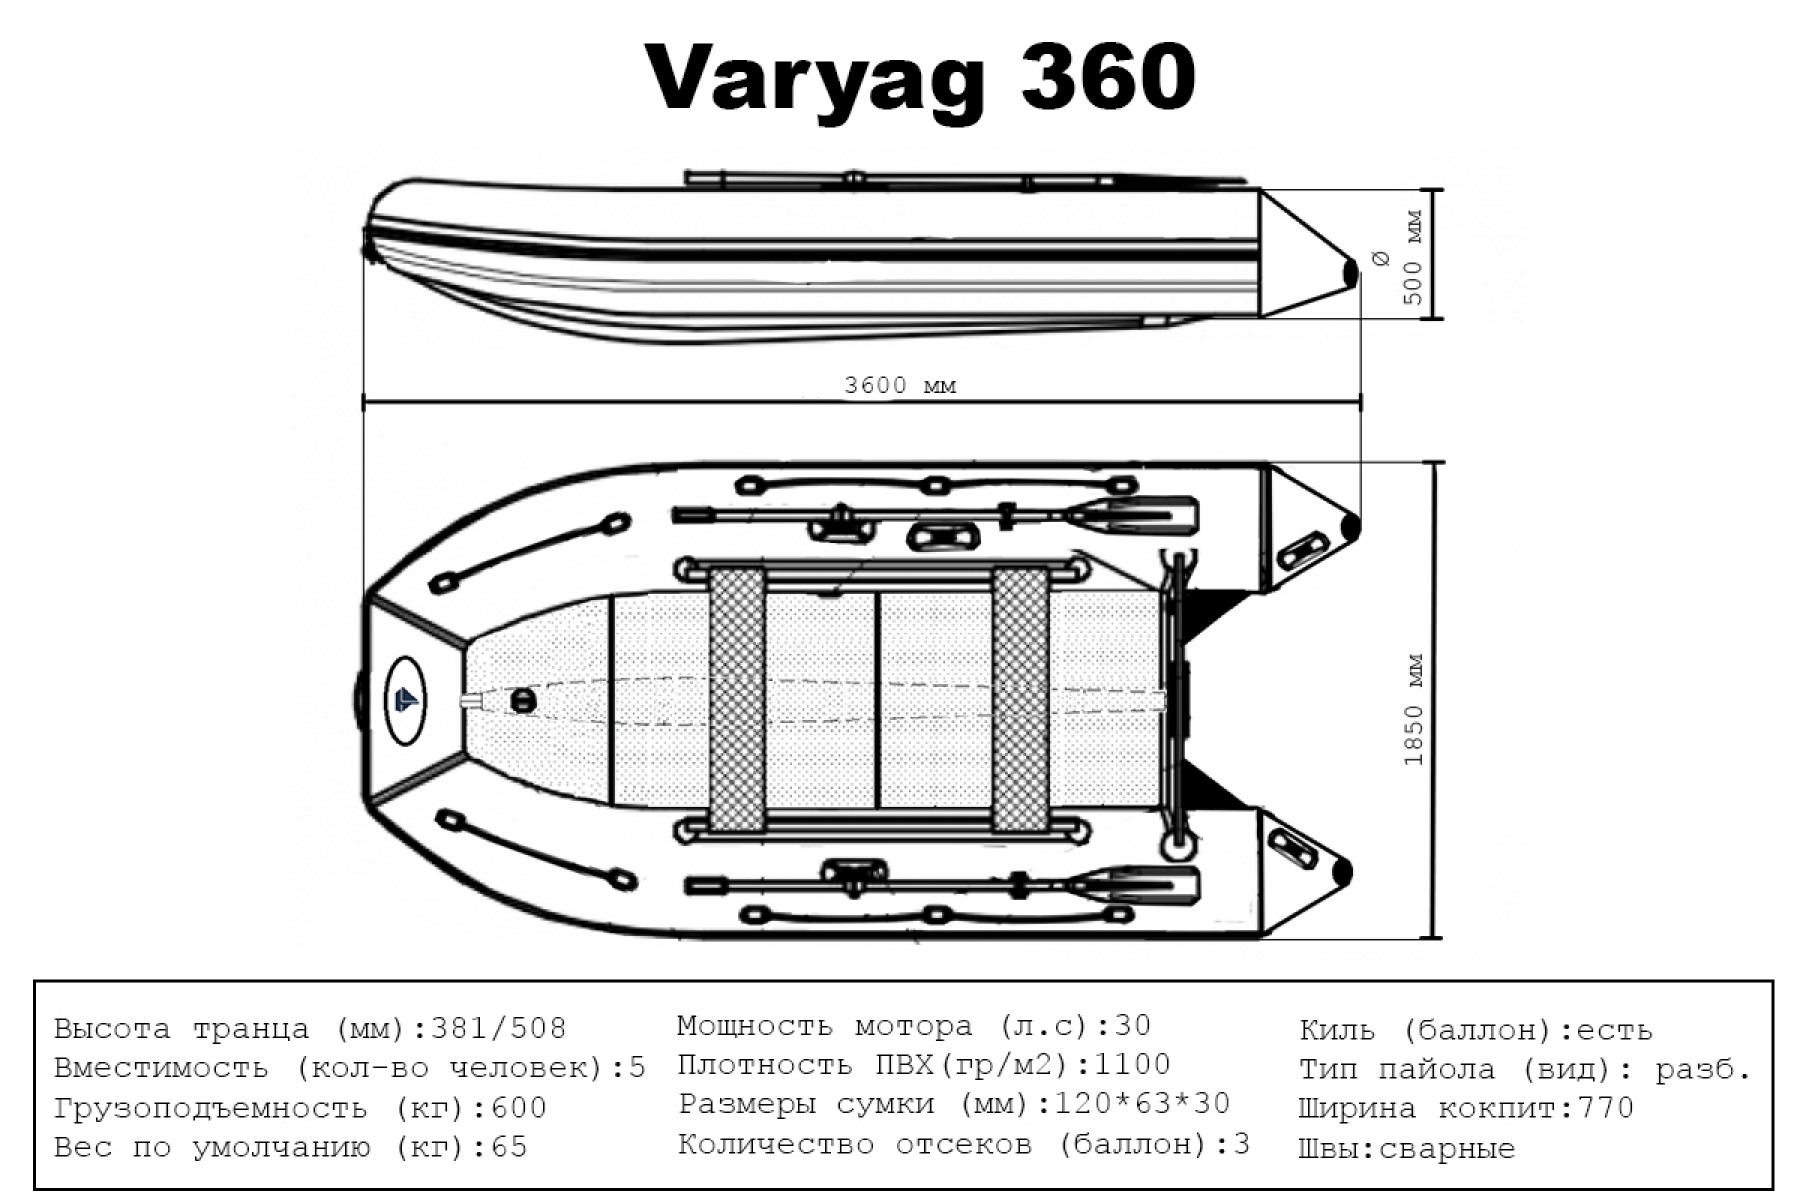 Big Boat Варяг 360